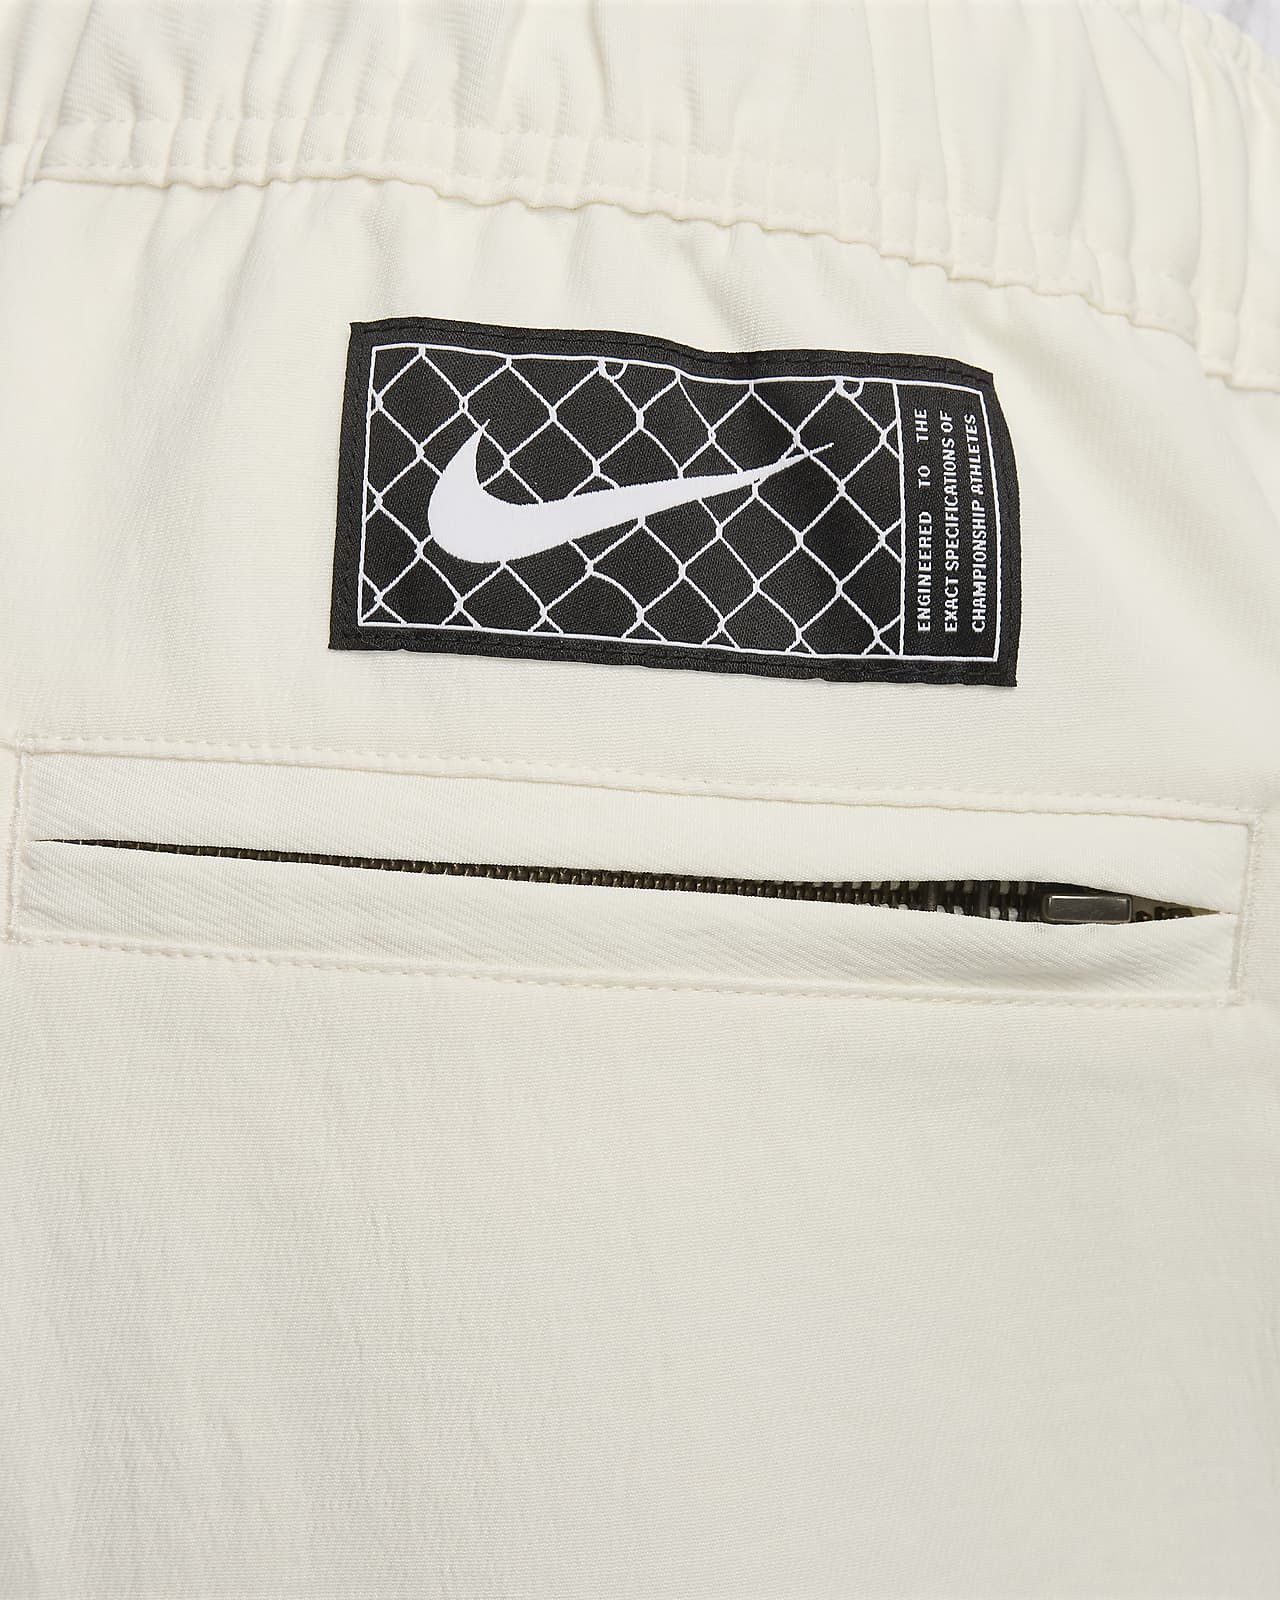 Nike DNA Men's Tearaway Basketball Pants